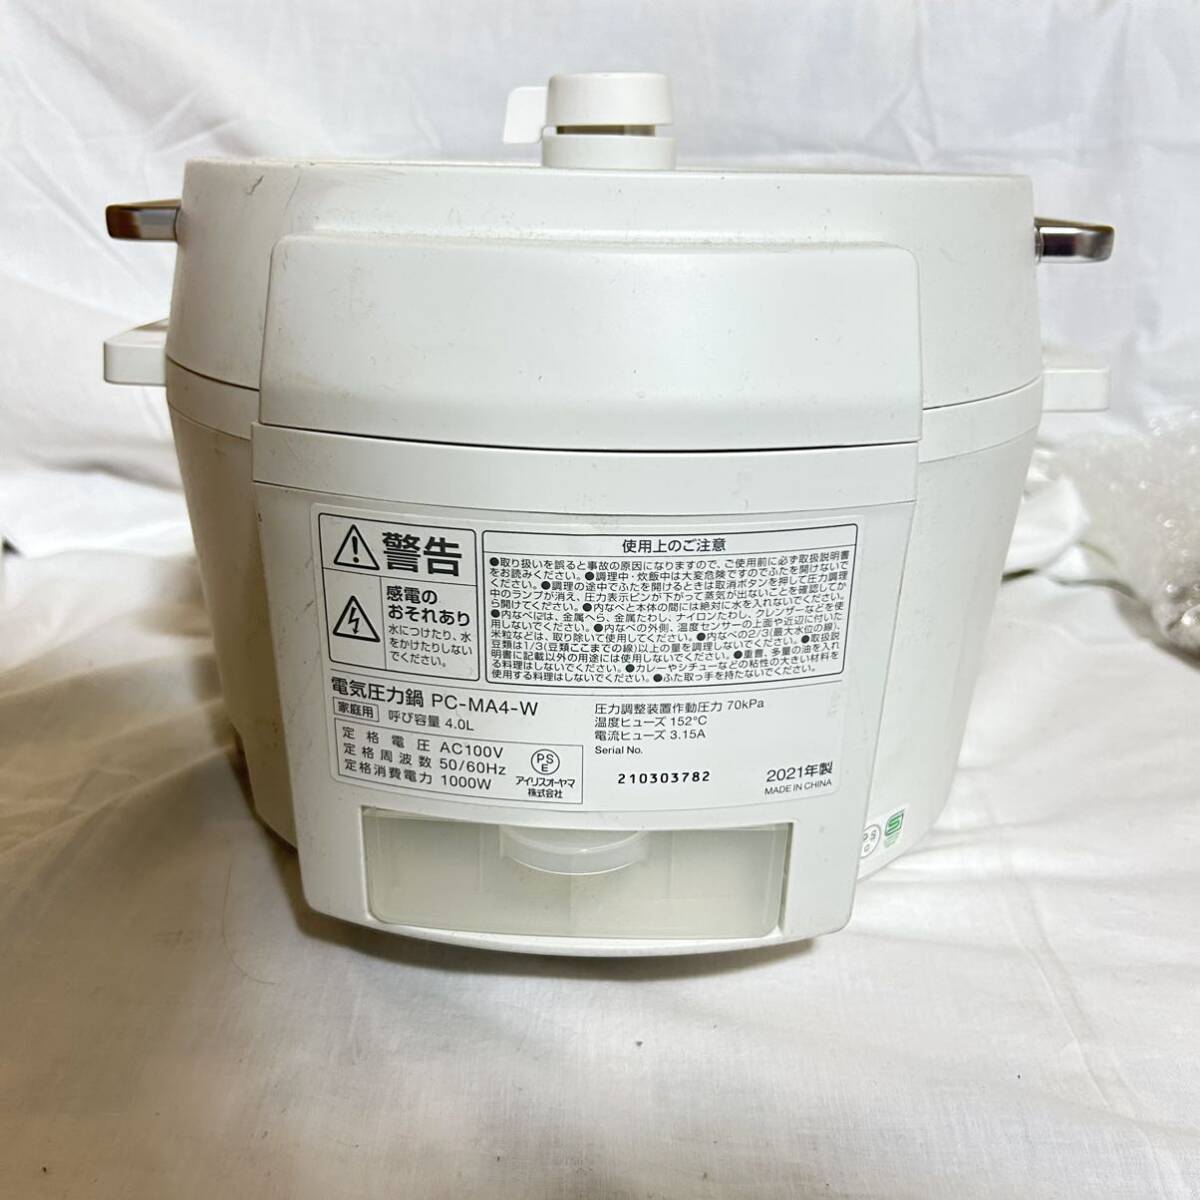  Iris o-yamaIRIS OHYAMA PC-MA4 white electric pressure cooker pressure cooker cookware SE